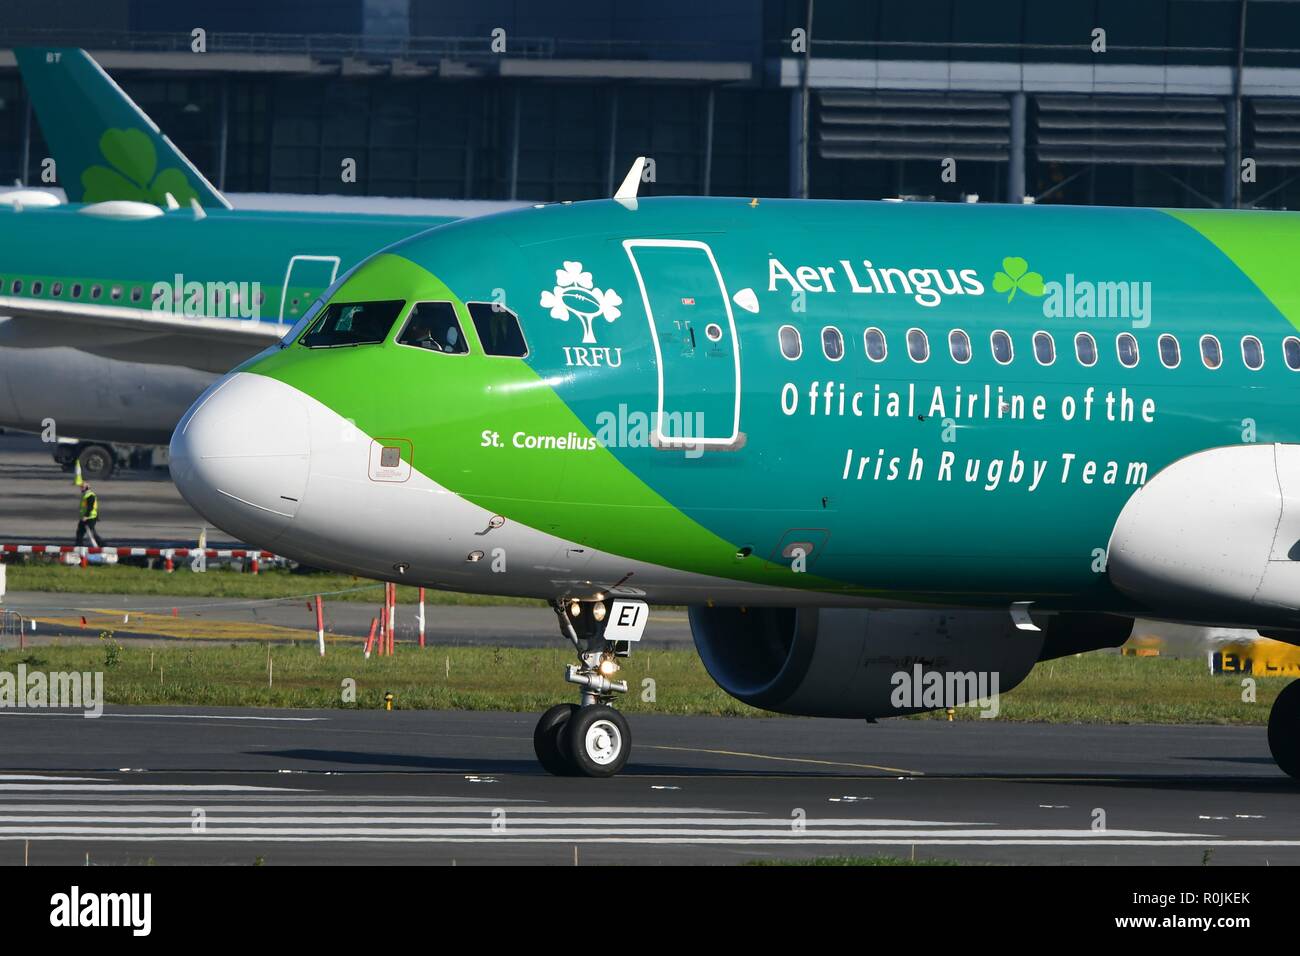 Aer lingus, Irish Rugby team Airbus A320 Stock Photo